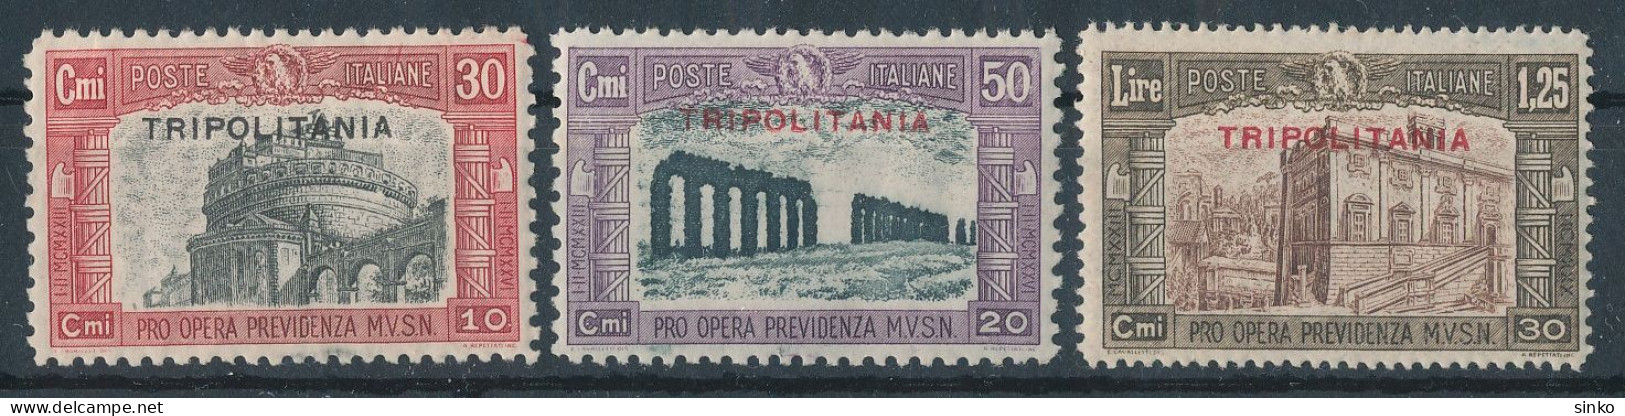 1929. Italian Tripolitania - Tripolitania